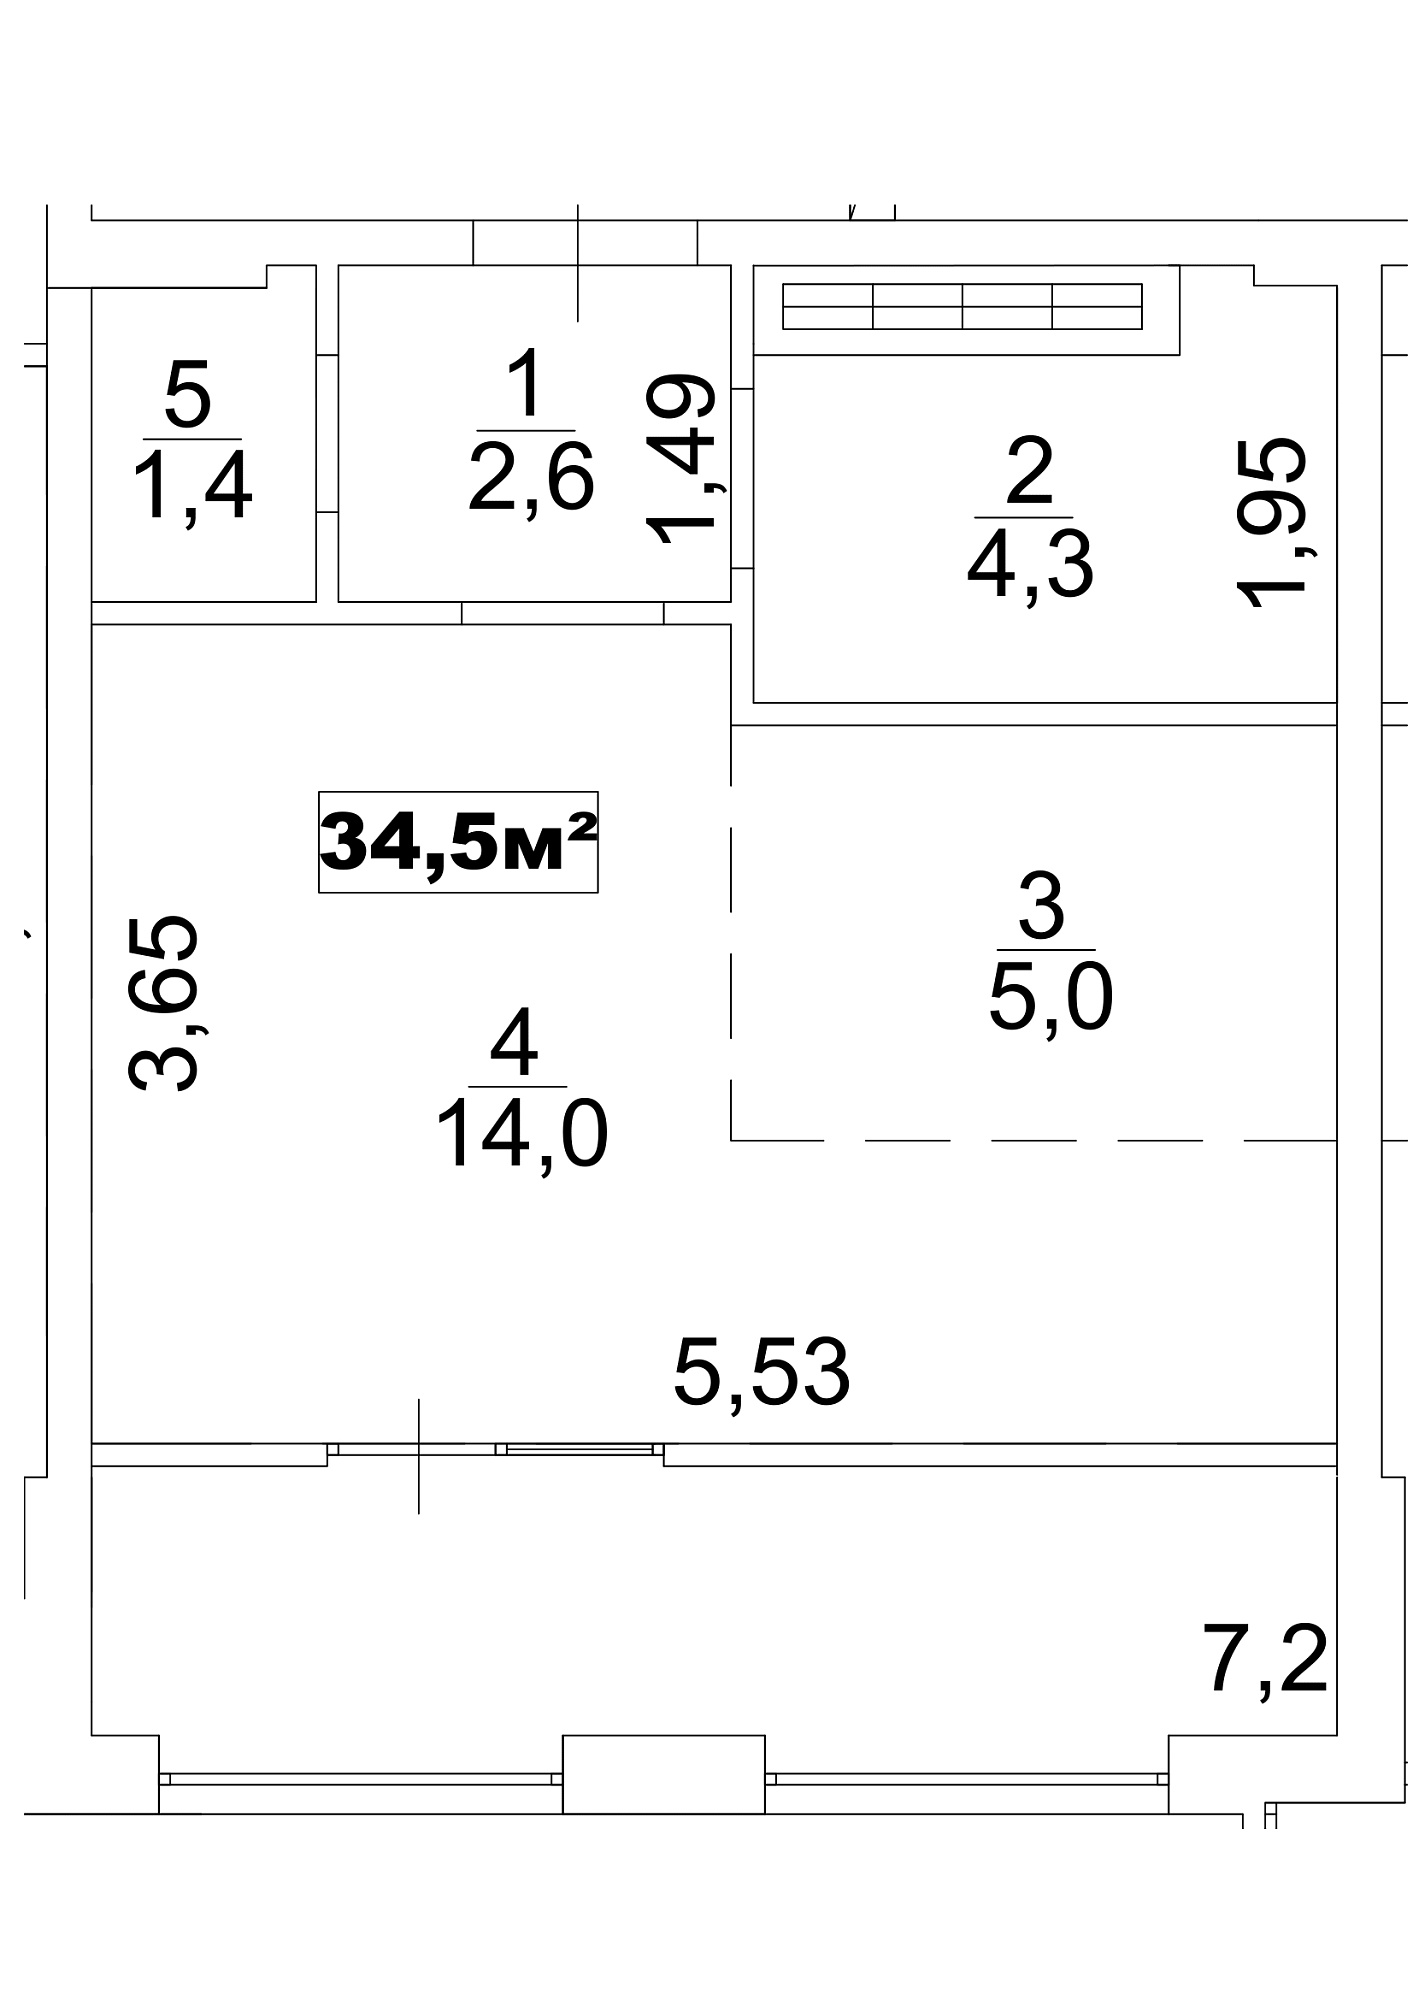 Planning Smart flats area 34.5m2, AB-13-07/00053.